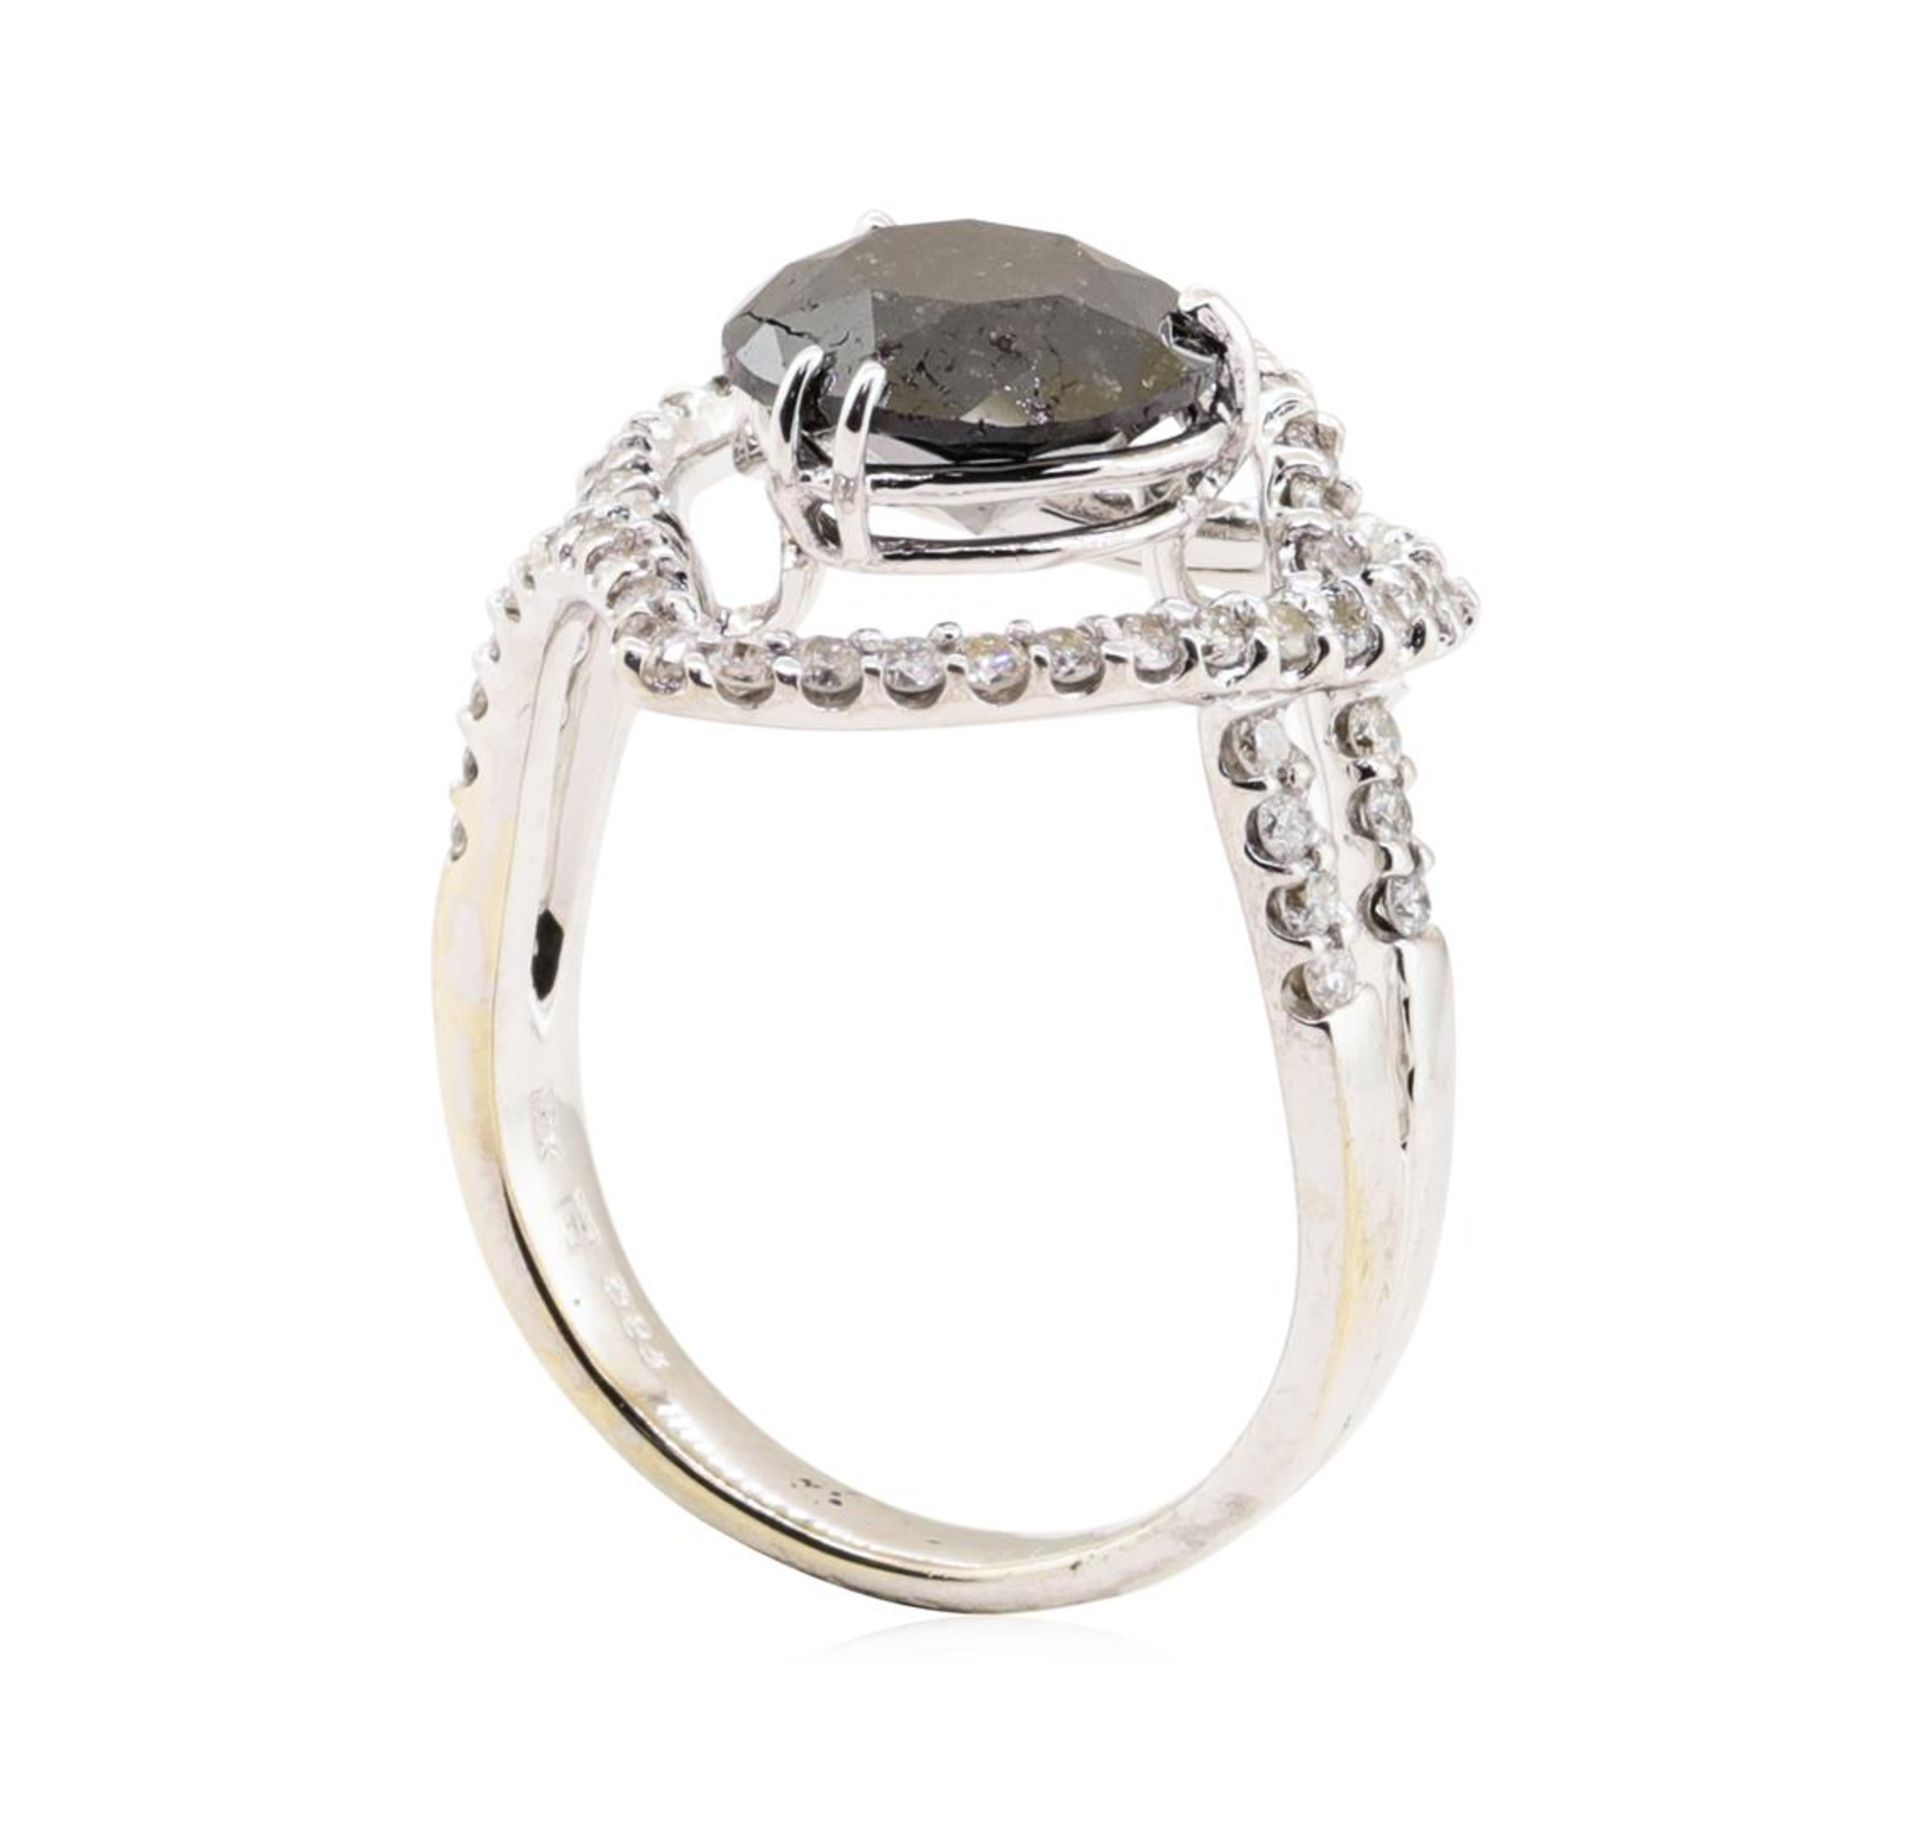 3.33ct Black Diamond and Diamond Ring - 18KT White Gold - Image 4 of 5